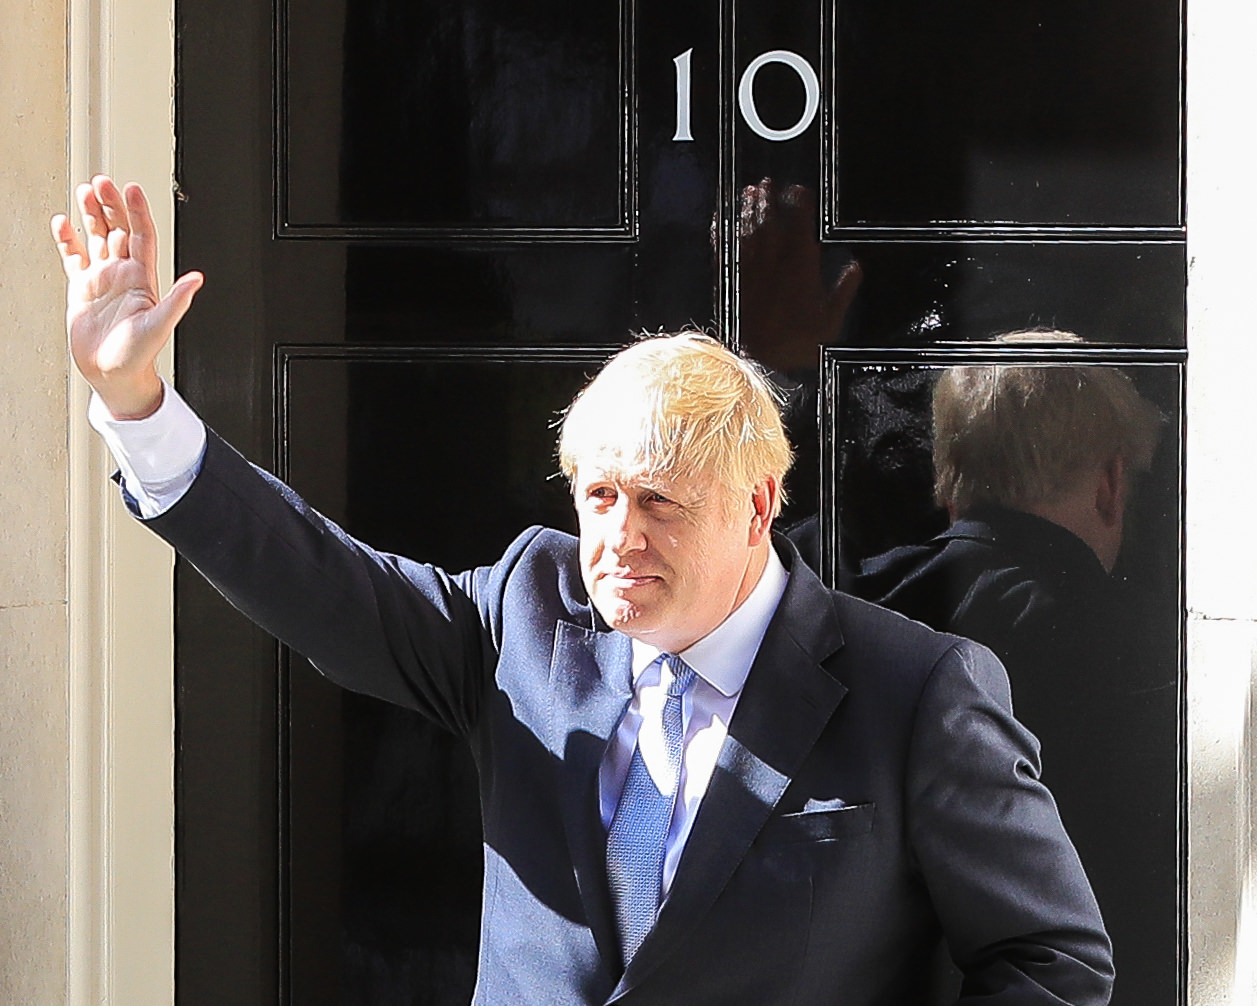 Boris Johnson sai vitorioso das eleições no Reino Unido